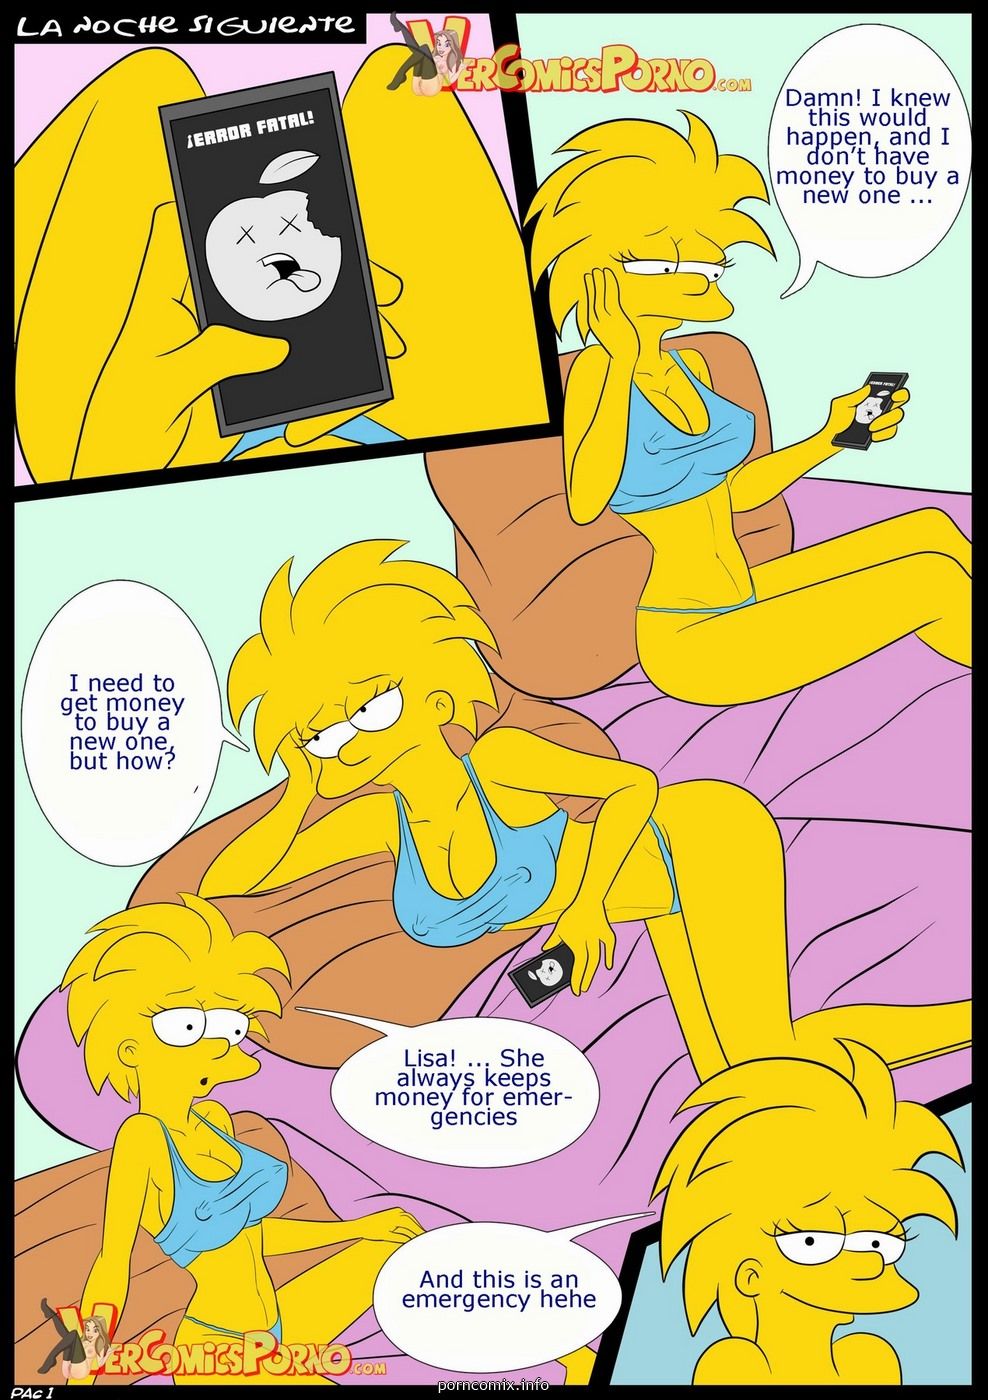 [CROC] Los Simpsons - Old Habits 2 Eng. page 2